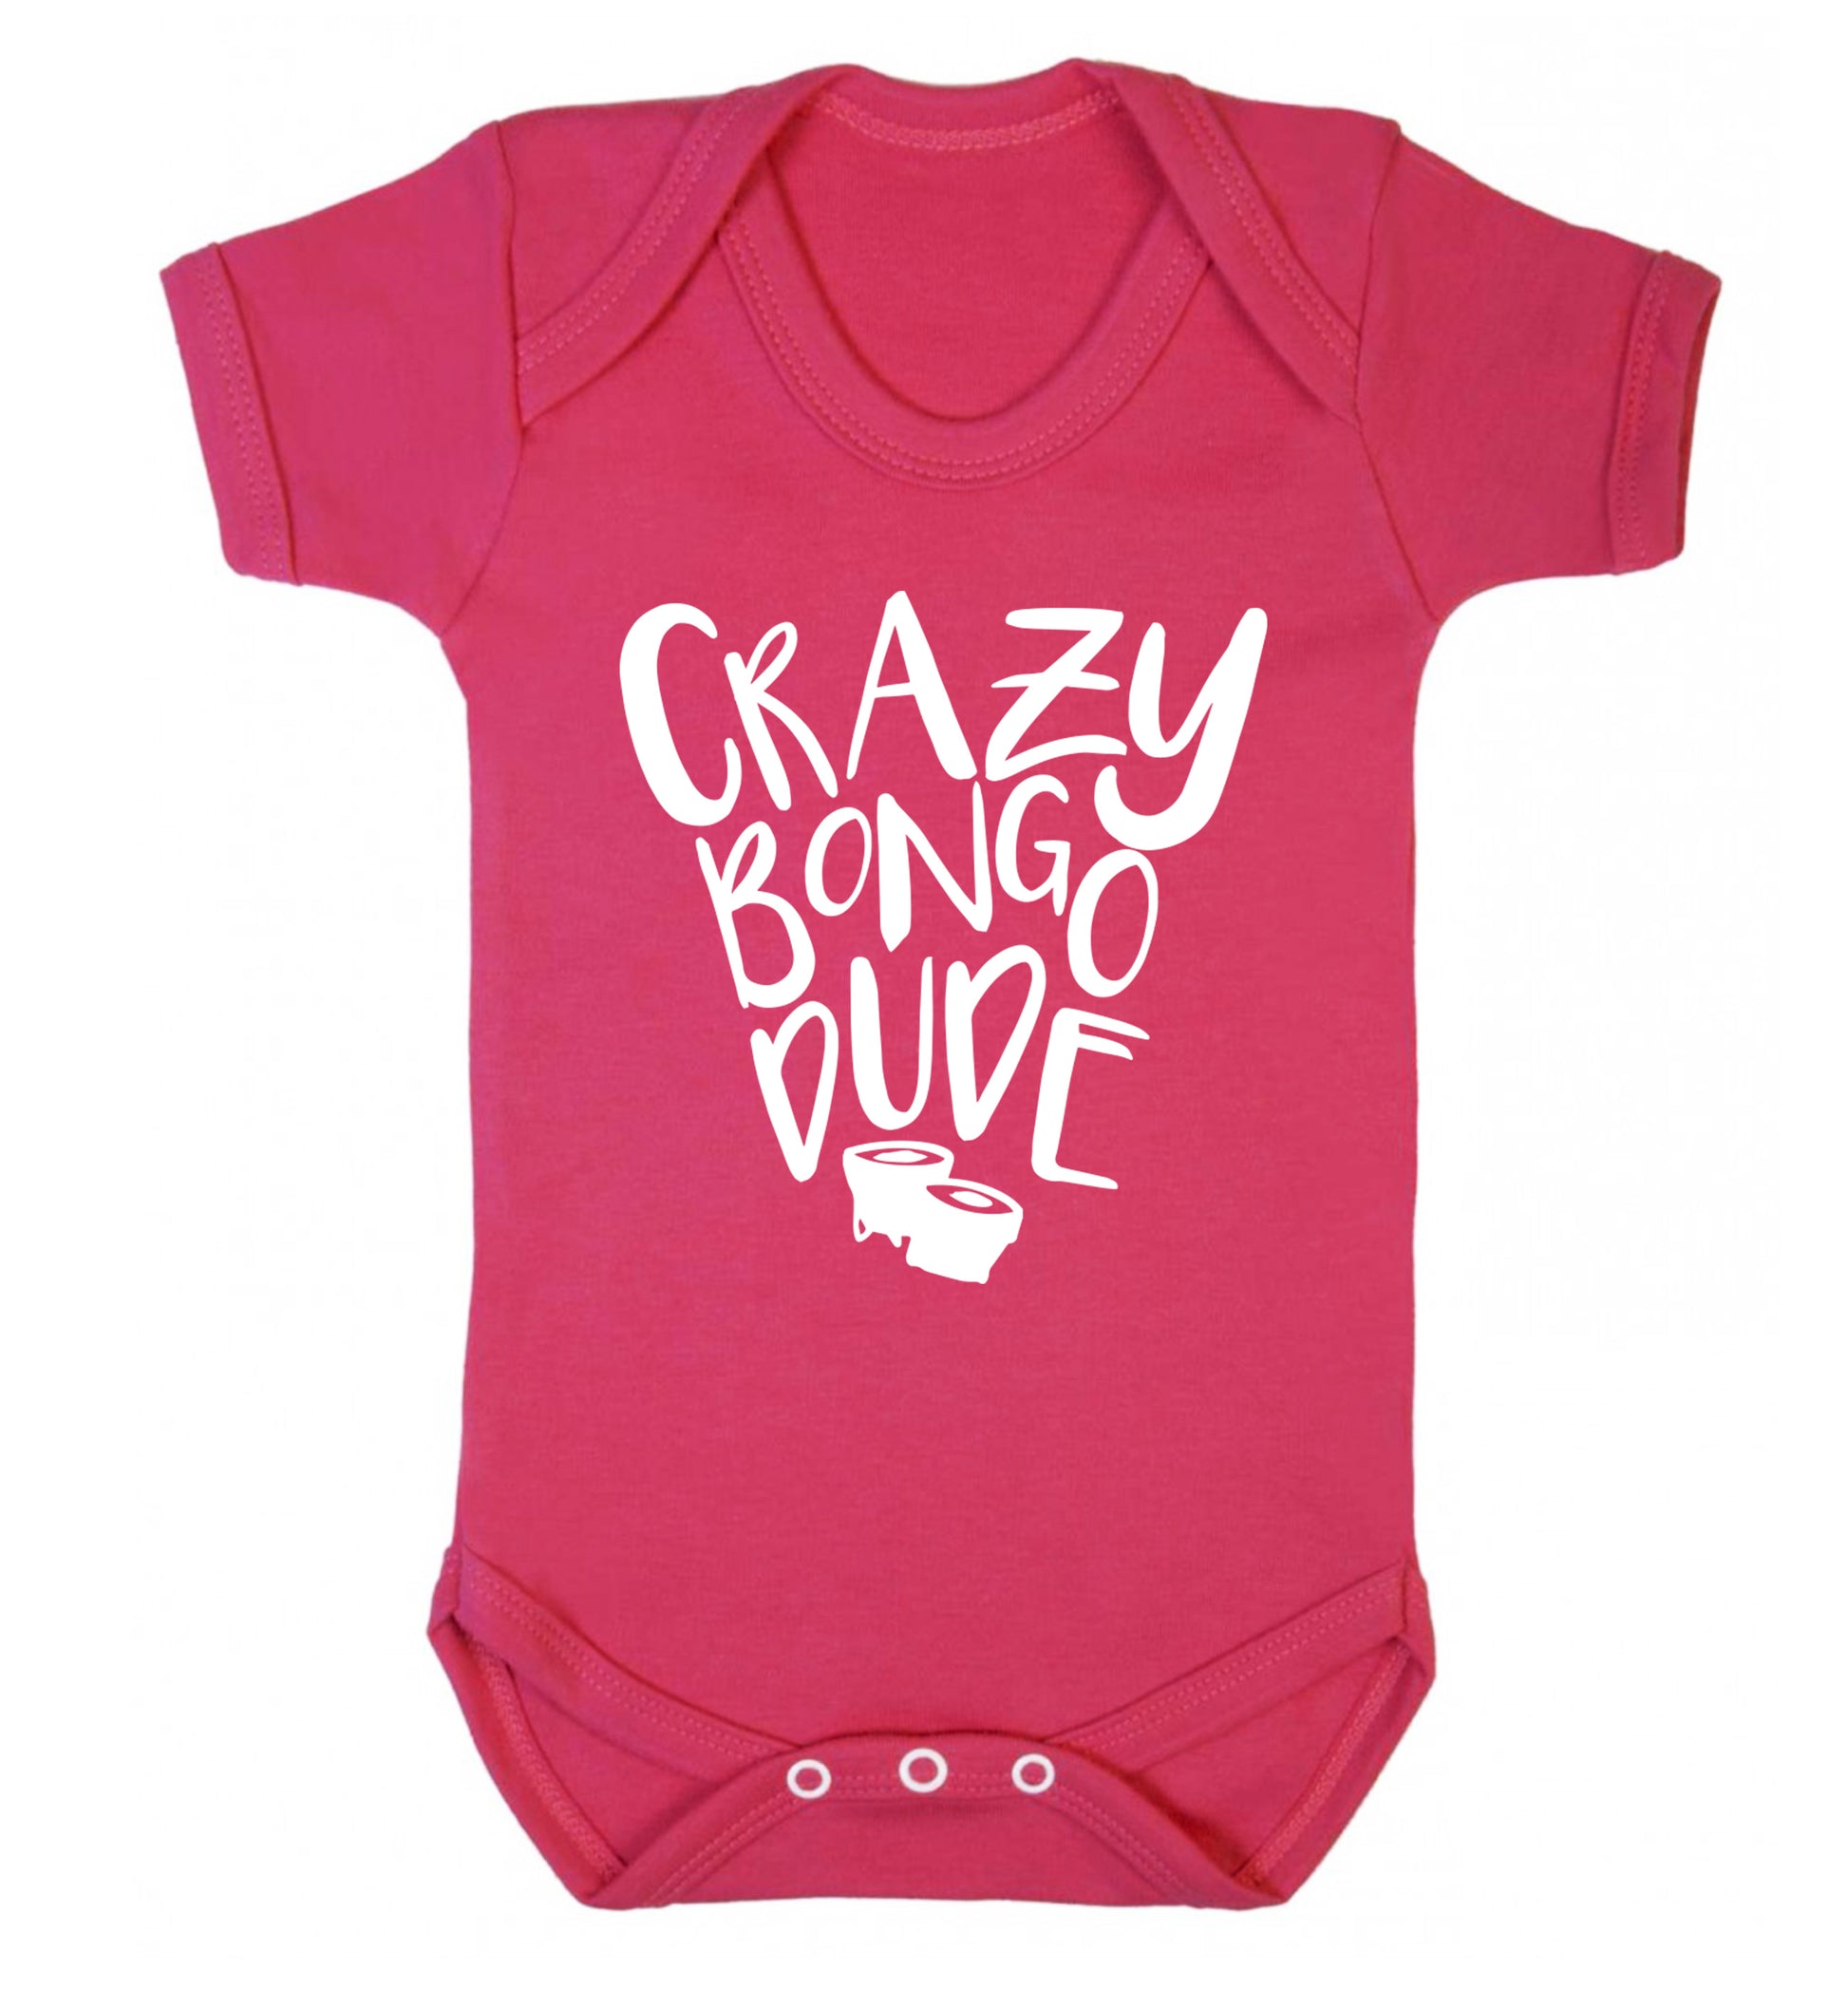 Crazy bongo dude Baby Vest dark pink 18-24 months